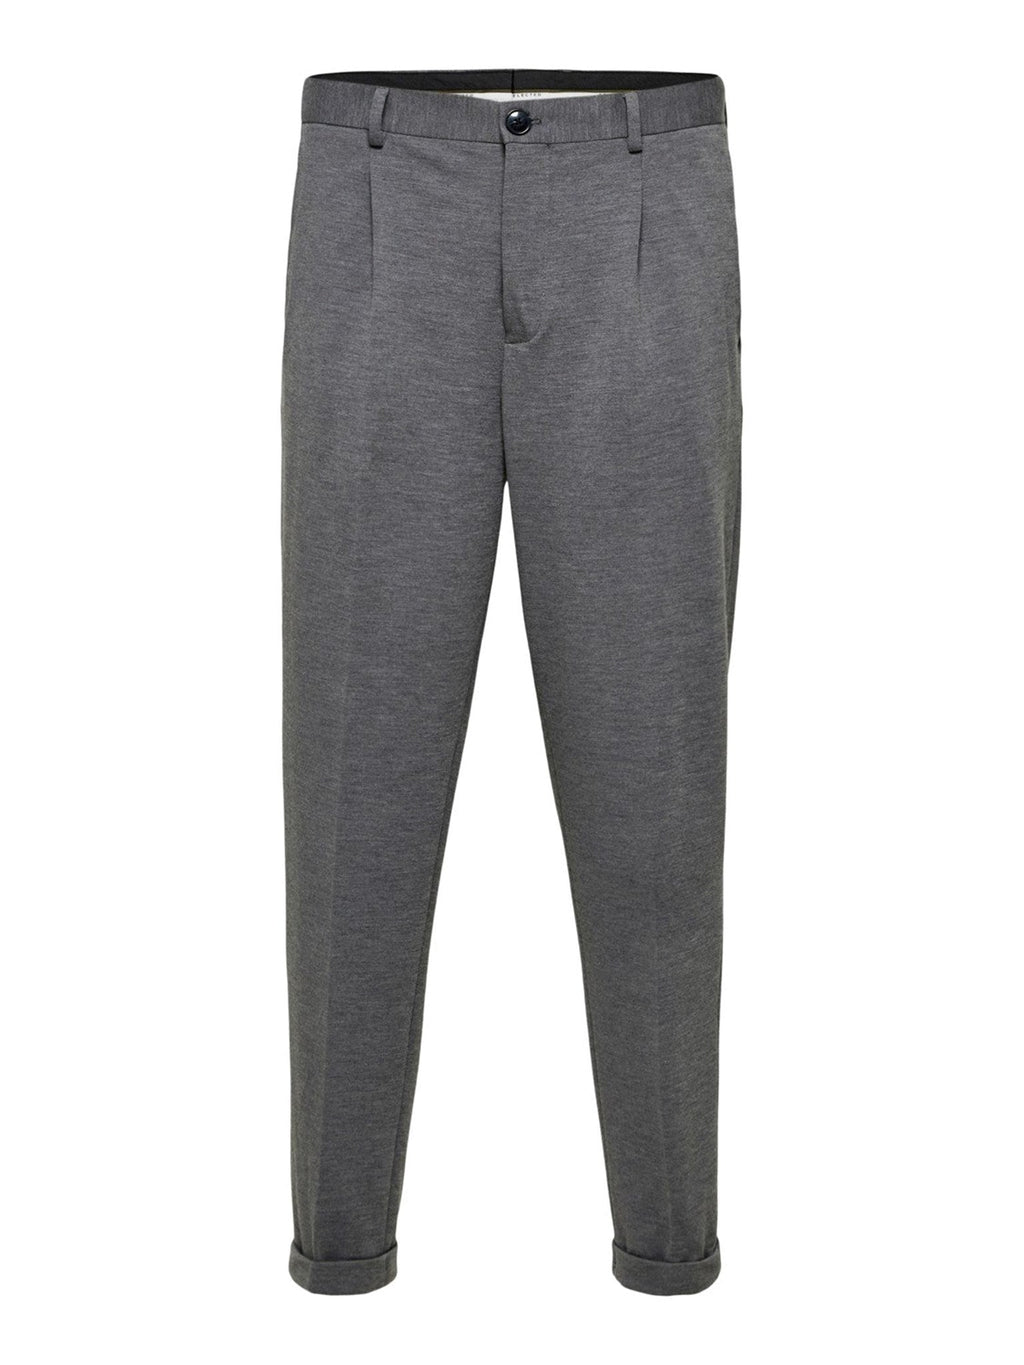 Flex Pants - Gray